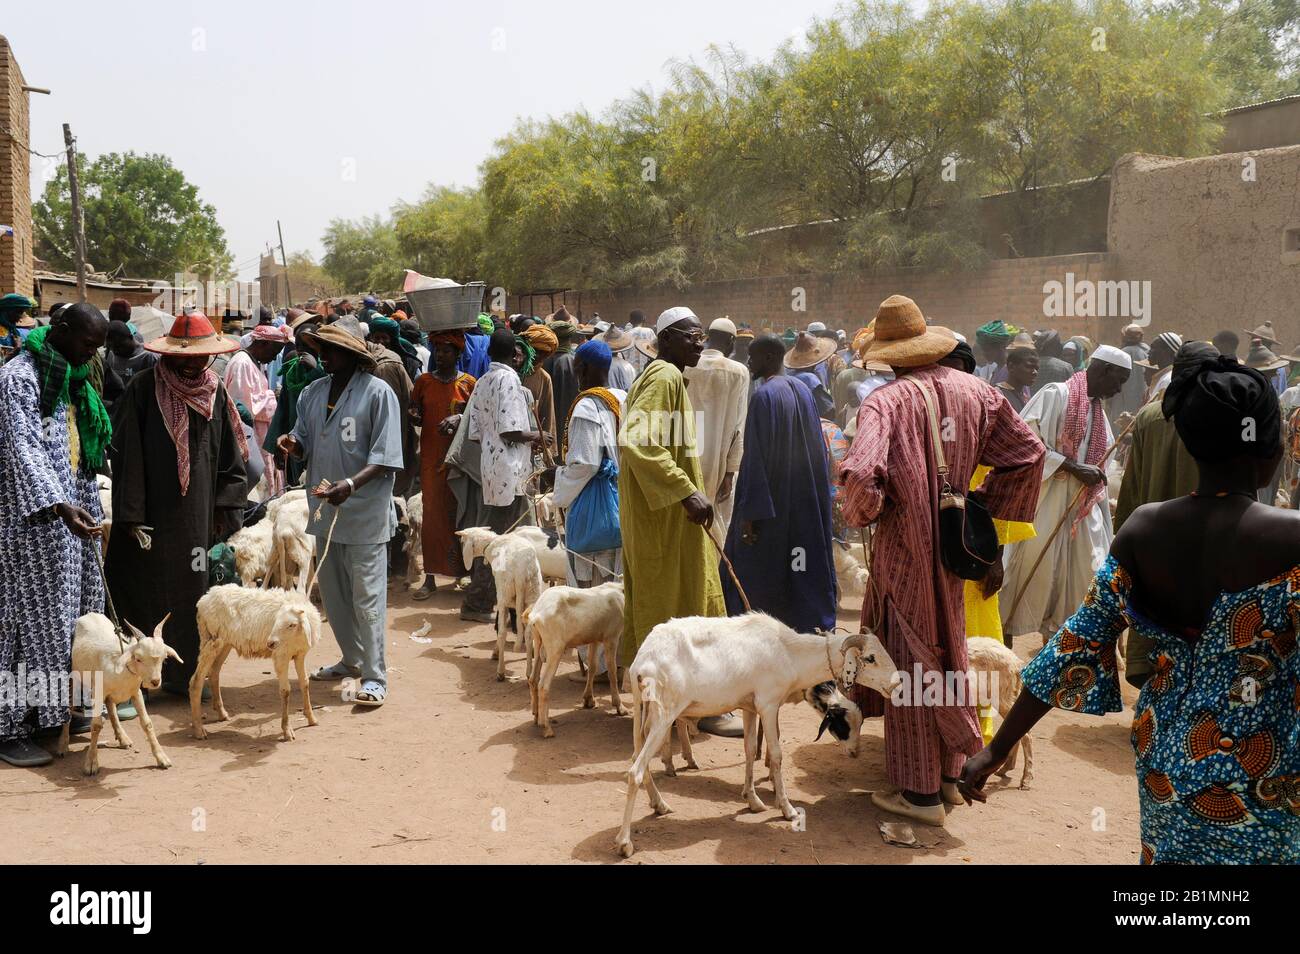 Mali, Djenne, día del mercado, Fulani o Peulh hombre con sombrero tradicional Tengaade / Markttag, Fulbe oor Fulani Mann mit Hut Foto de stock